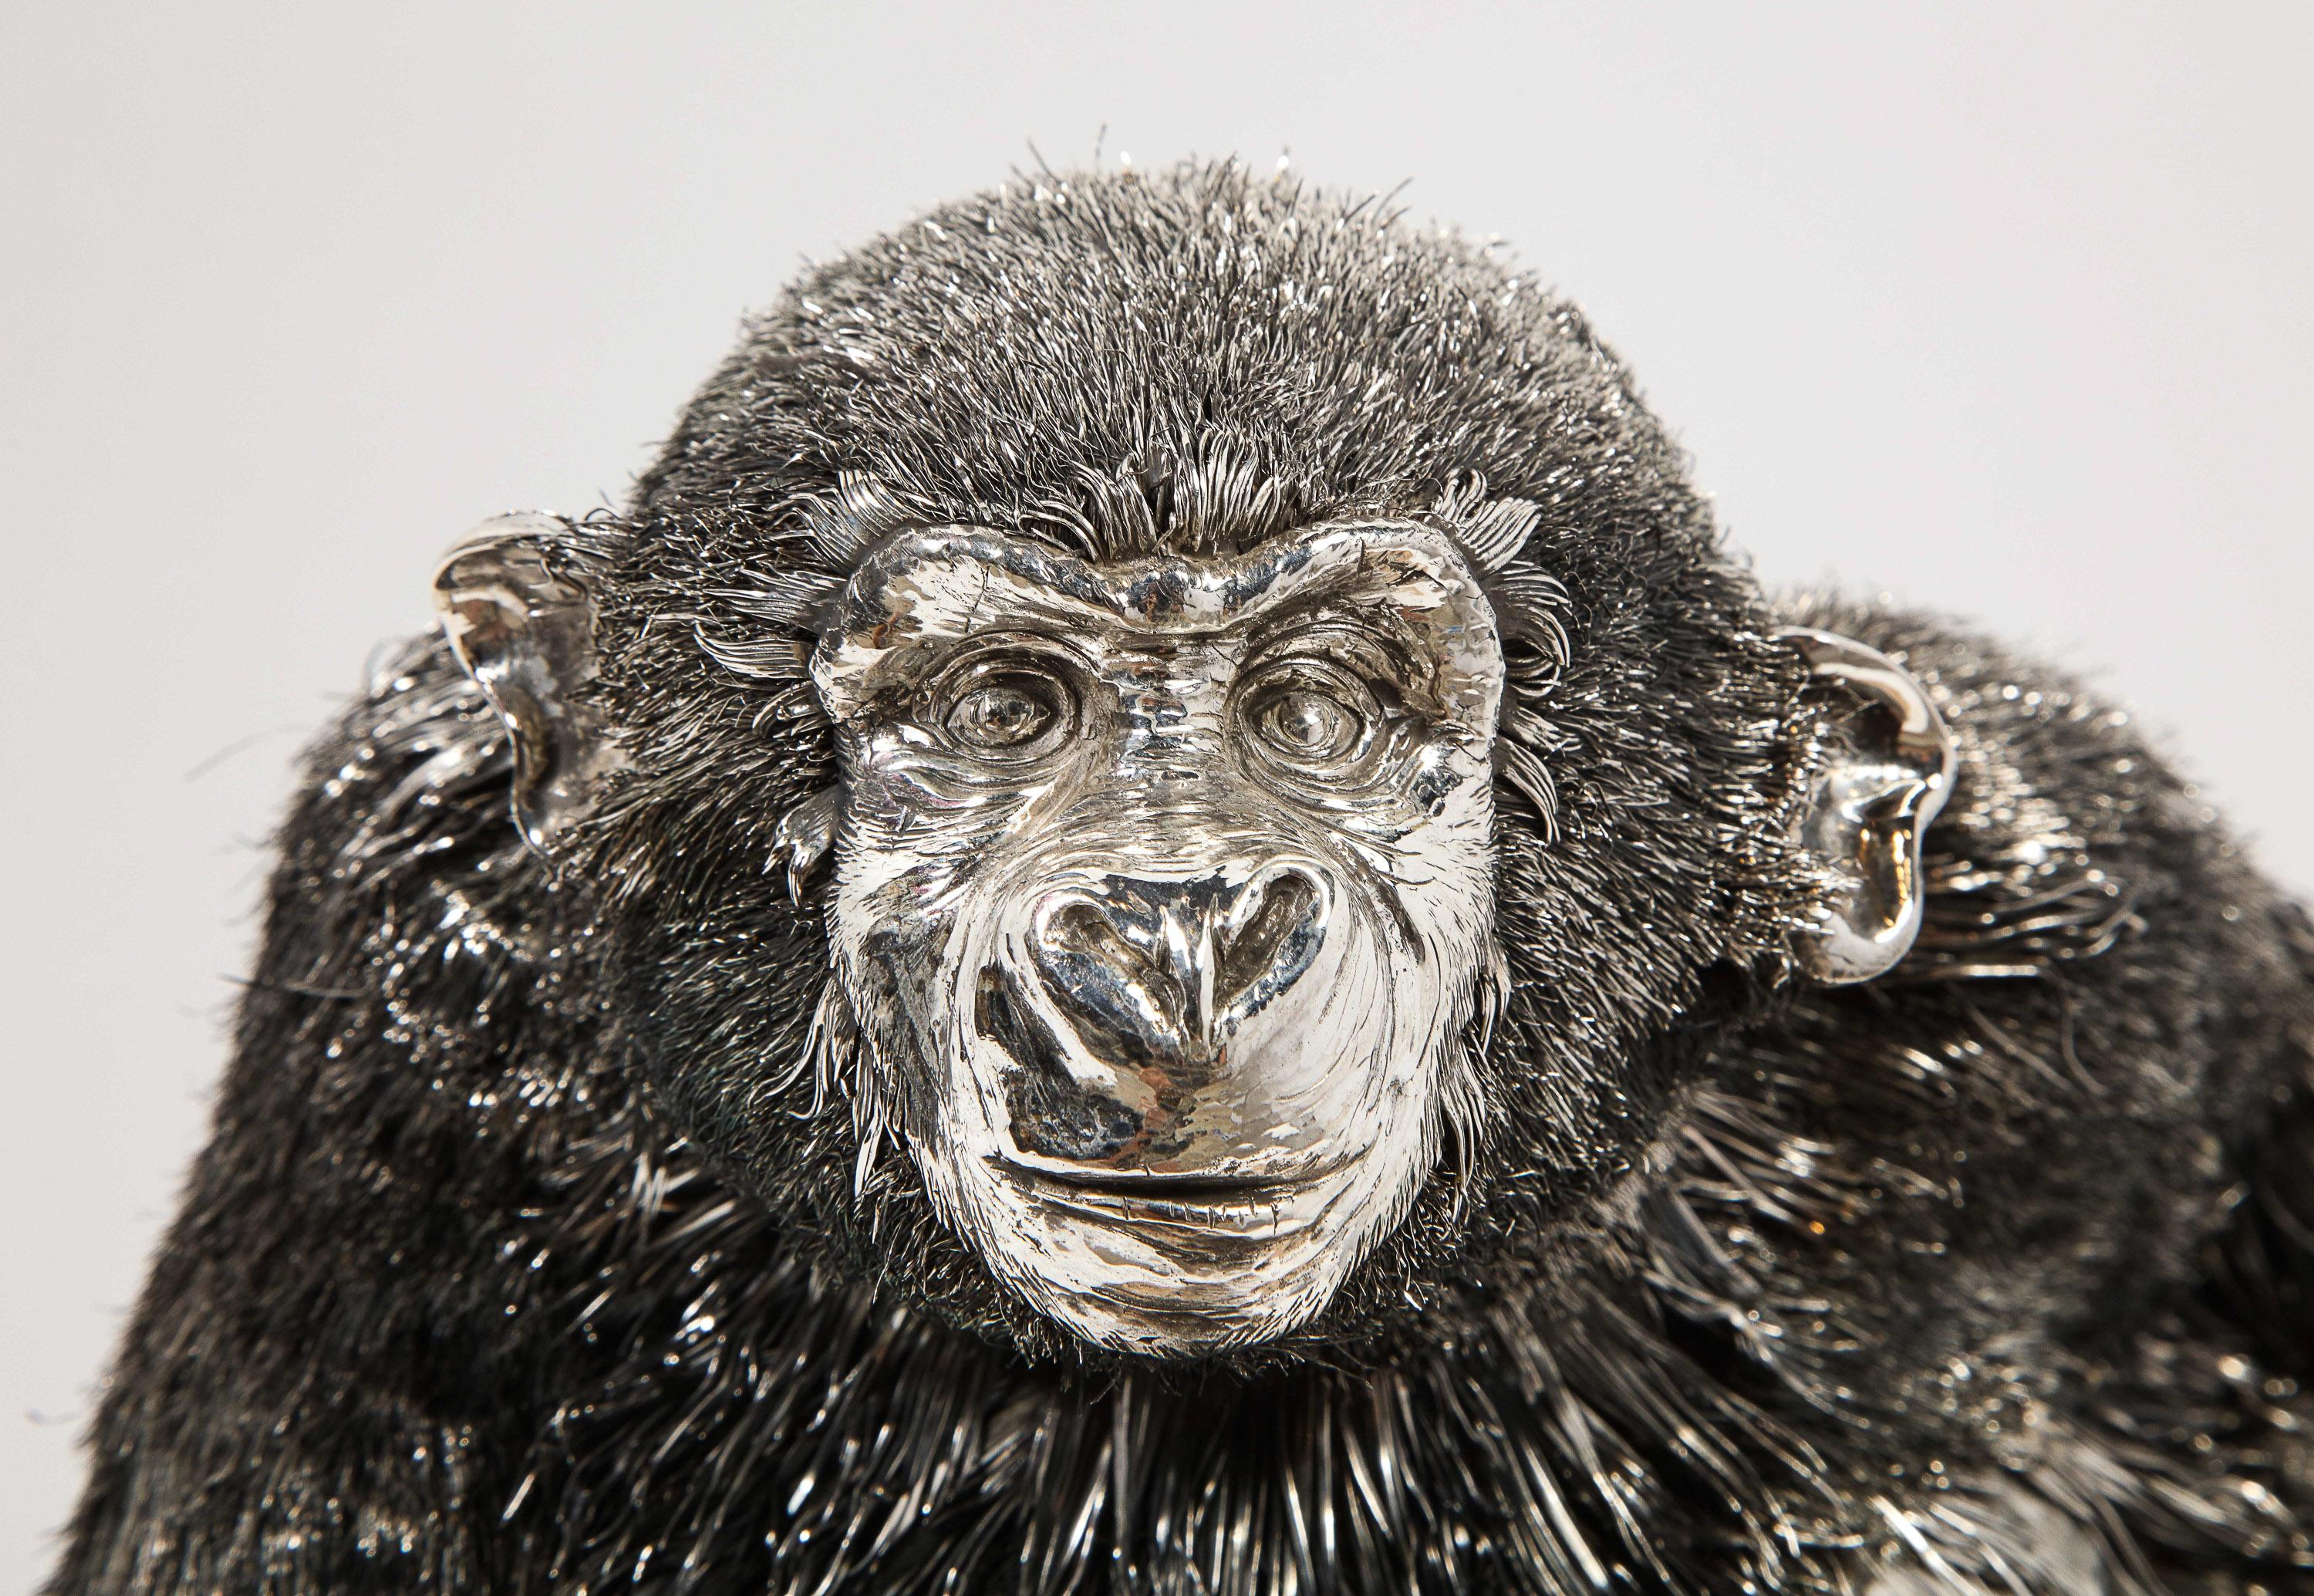 Mario Buccellati, a Rare and Exceptional Italian Silver Gorilla Monkey on Base 10